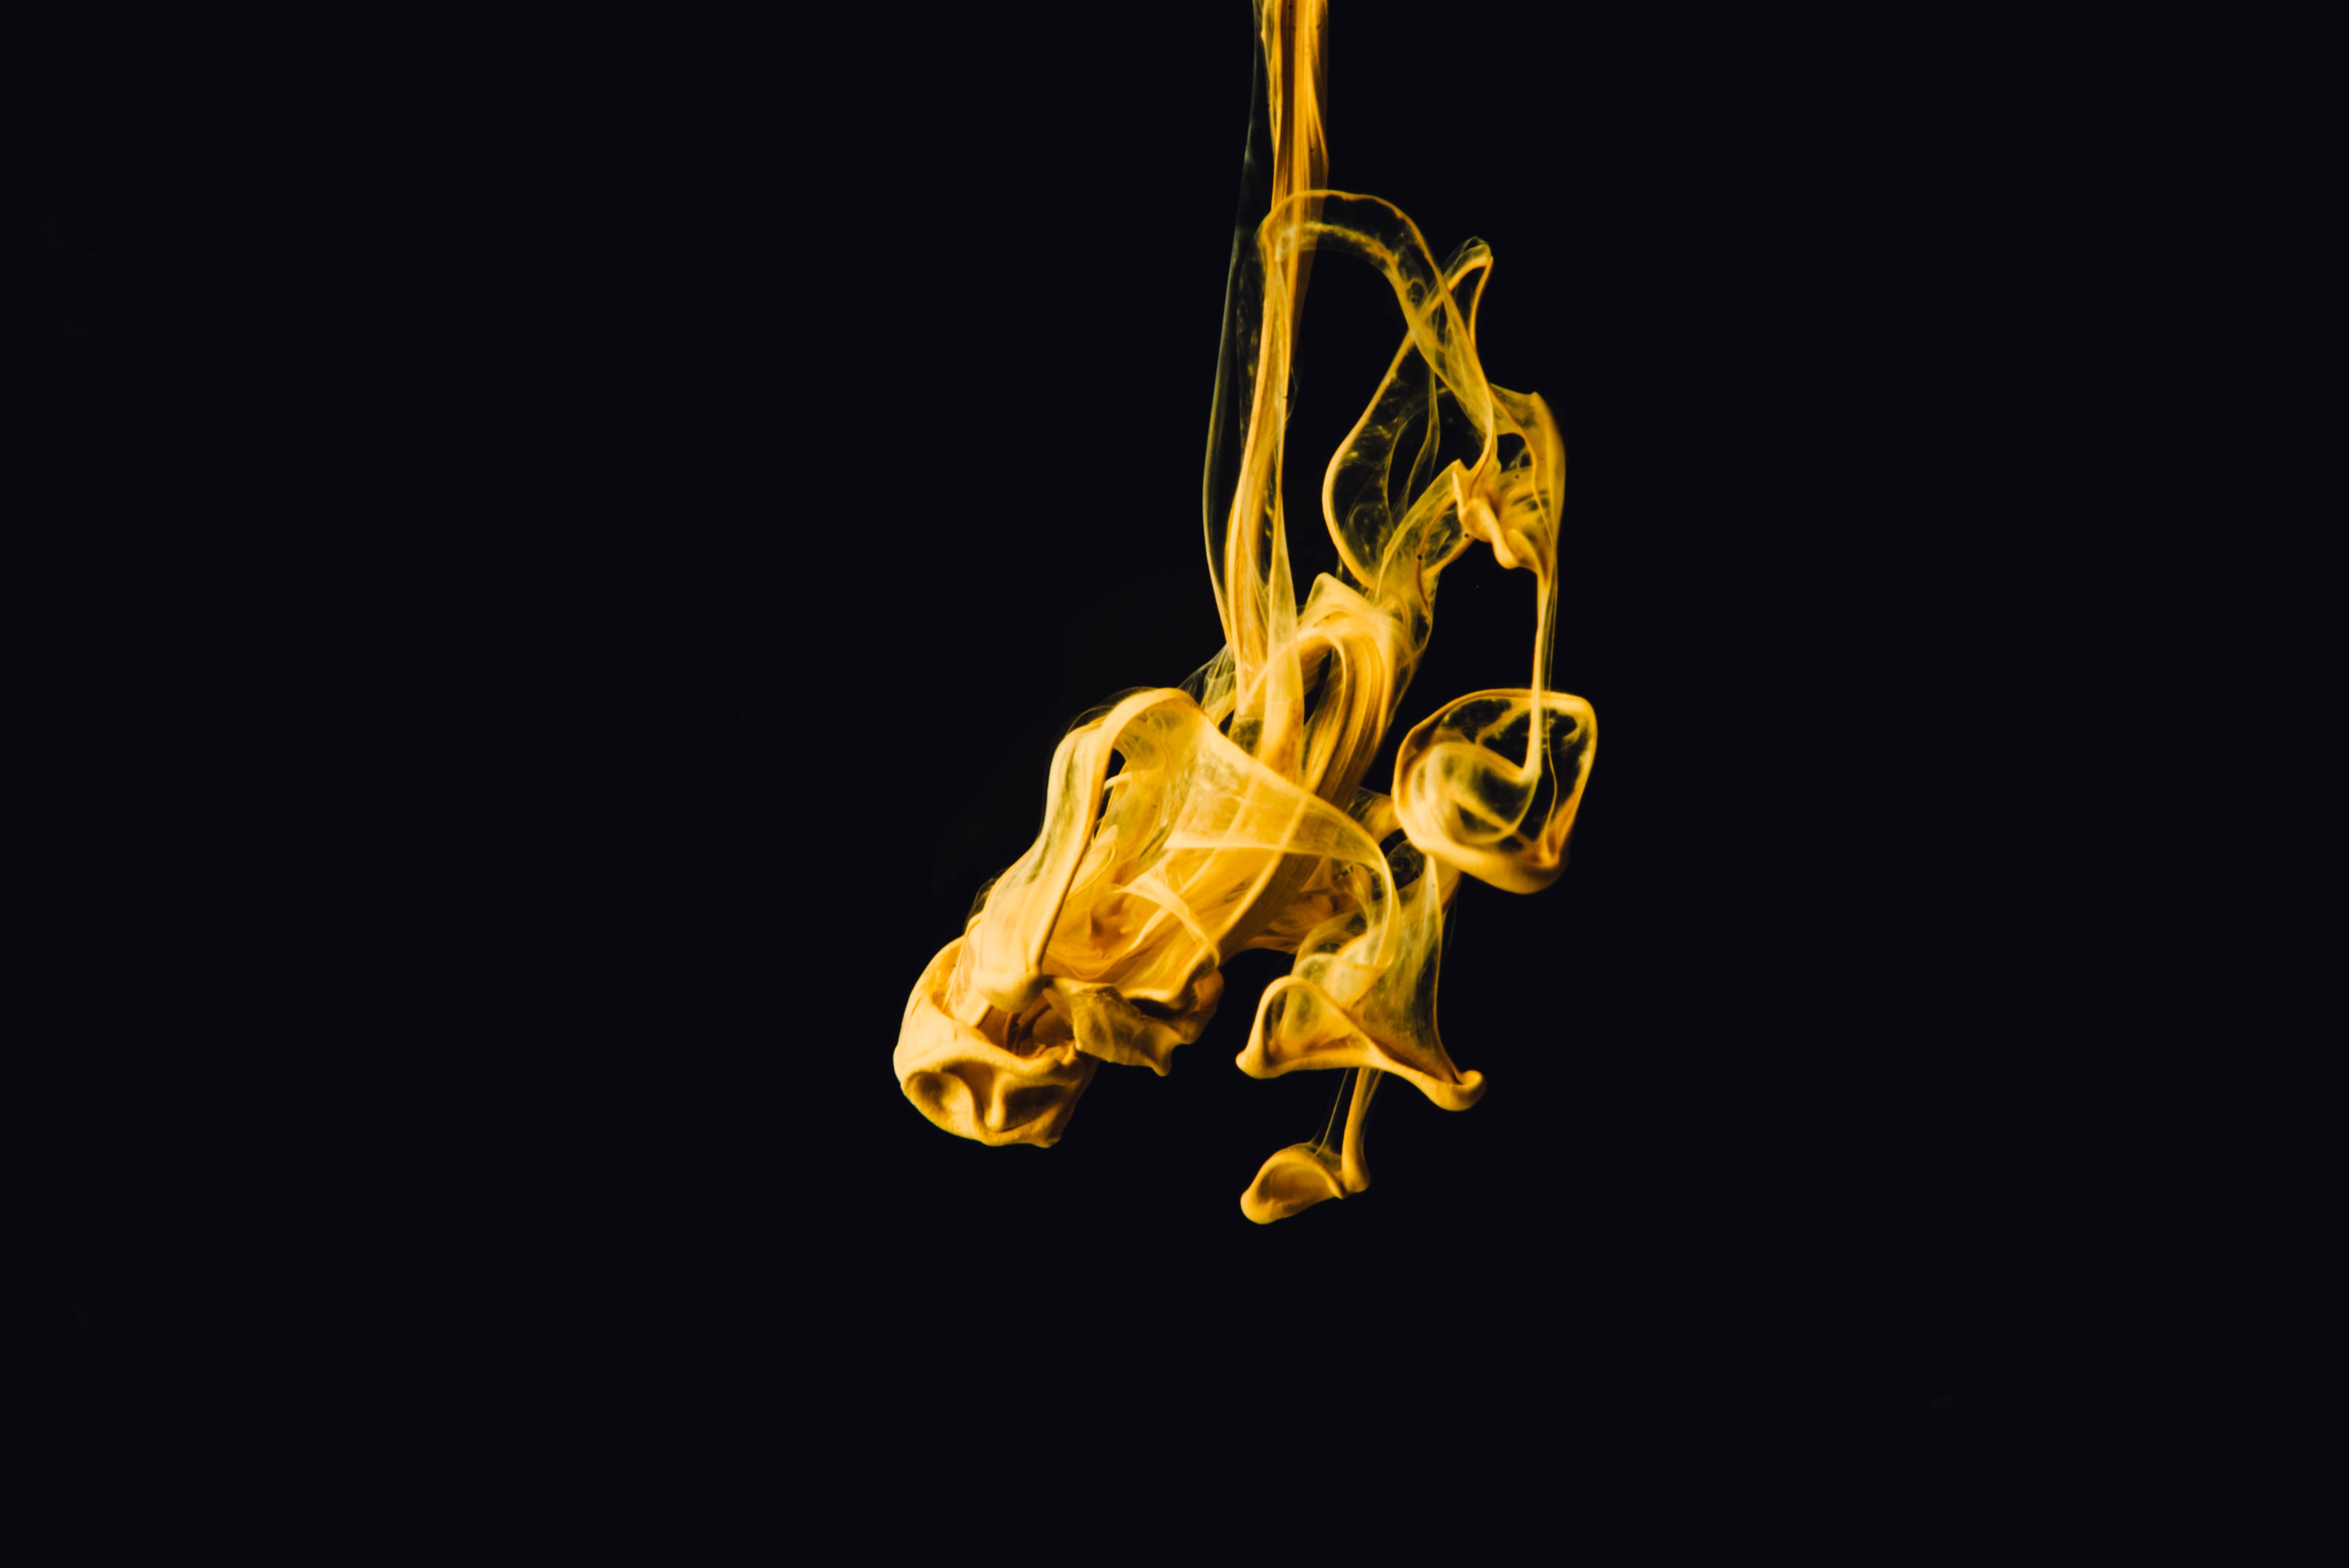 clots, abstract, smoke, plexus iphone wallpaper